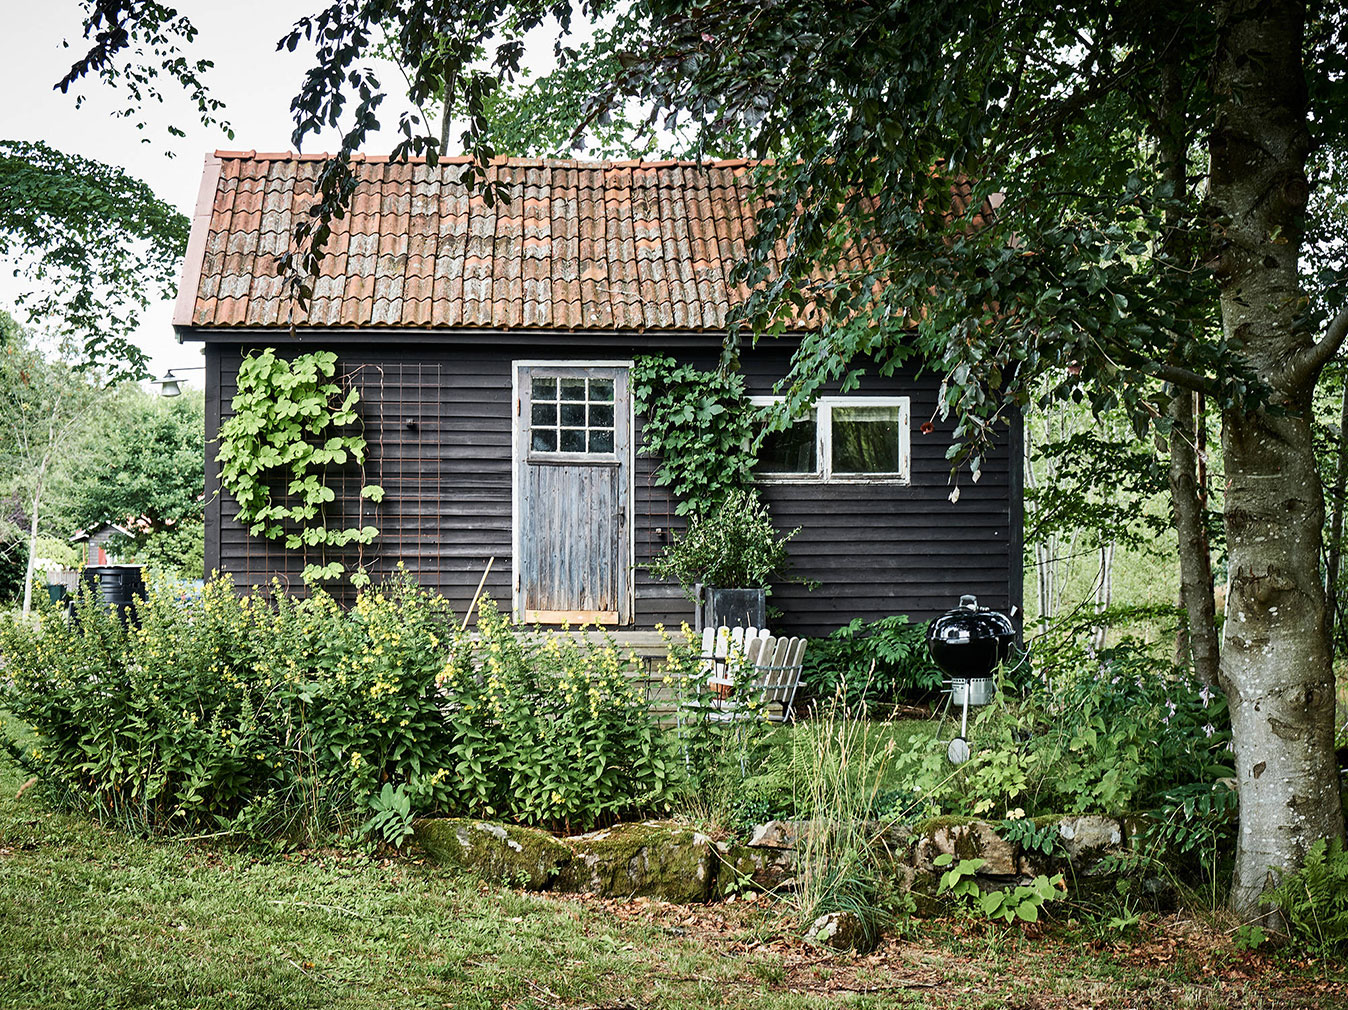 Swedish National Romantic cottage for sale near Gothenburg